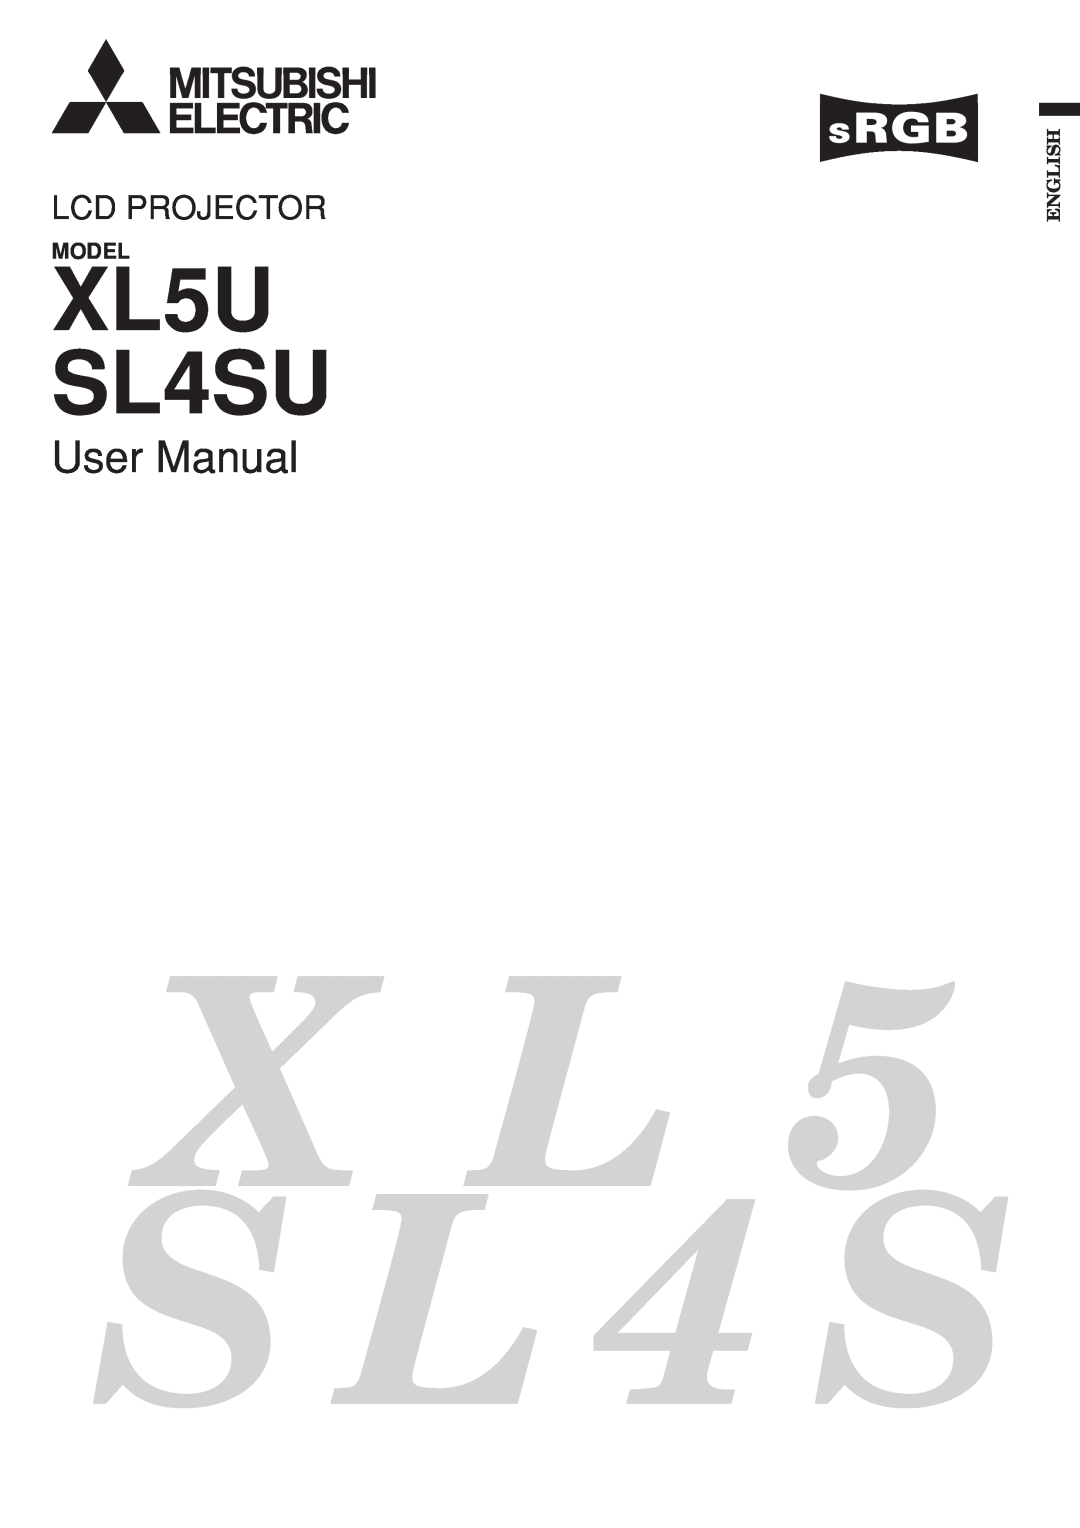 Mitsubishi Electronics user manual English, X L S L 4 S, XL5U SL4SU, User Manual, Lcd Projector, Model 